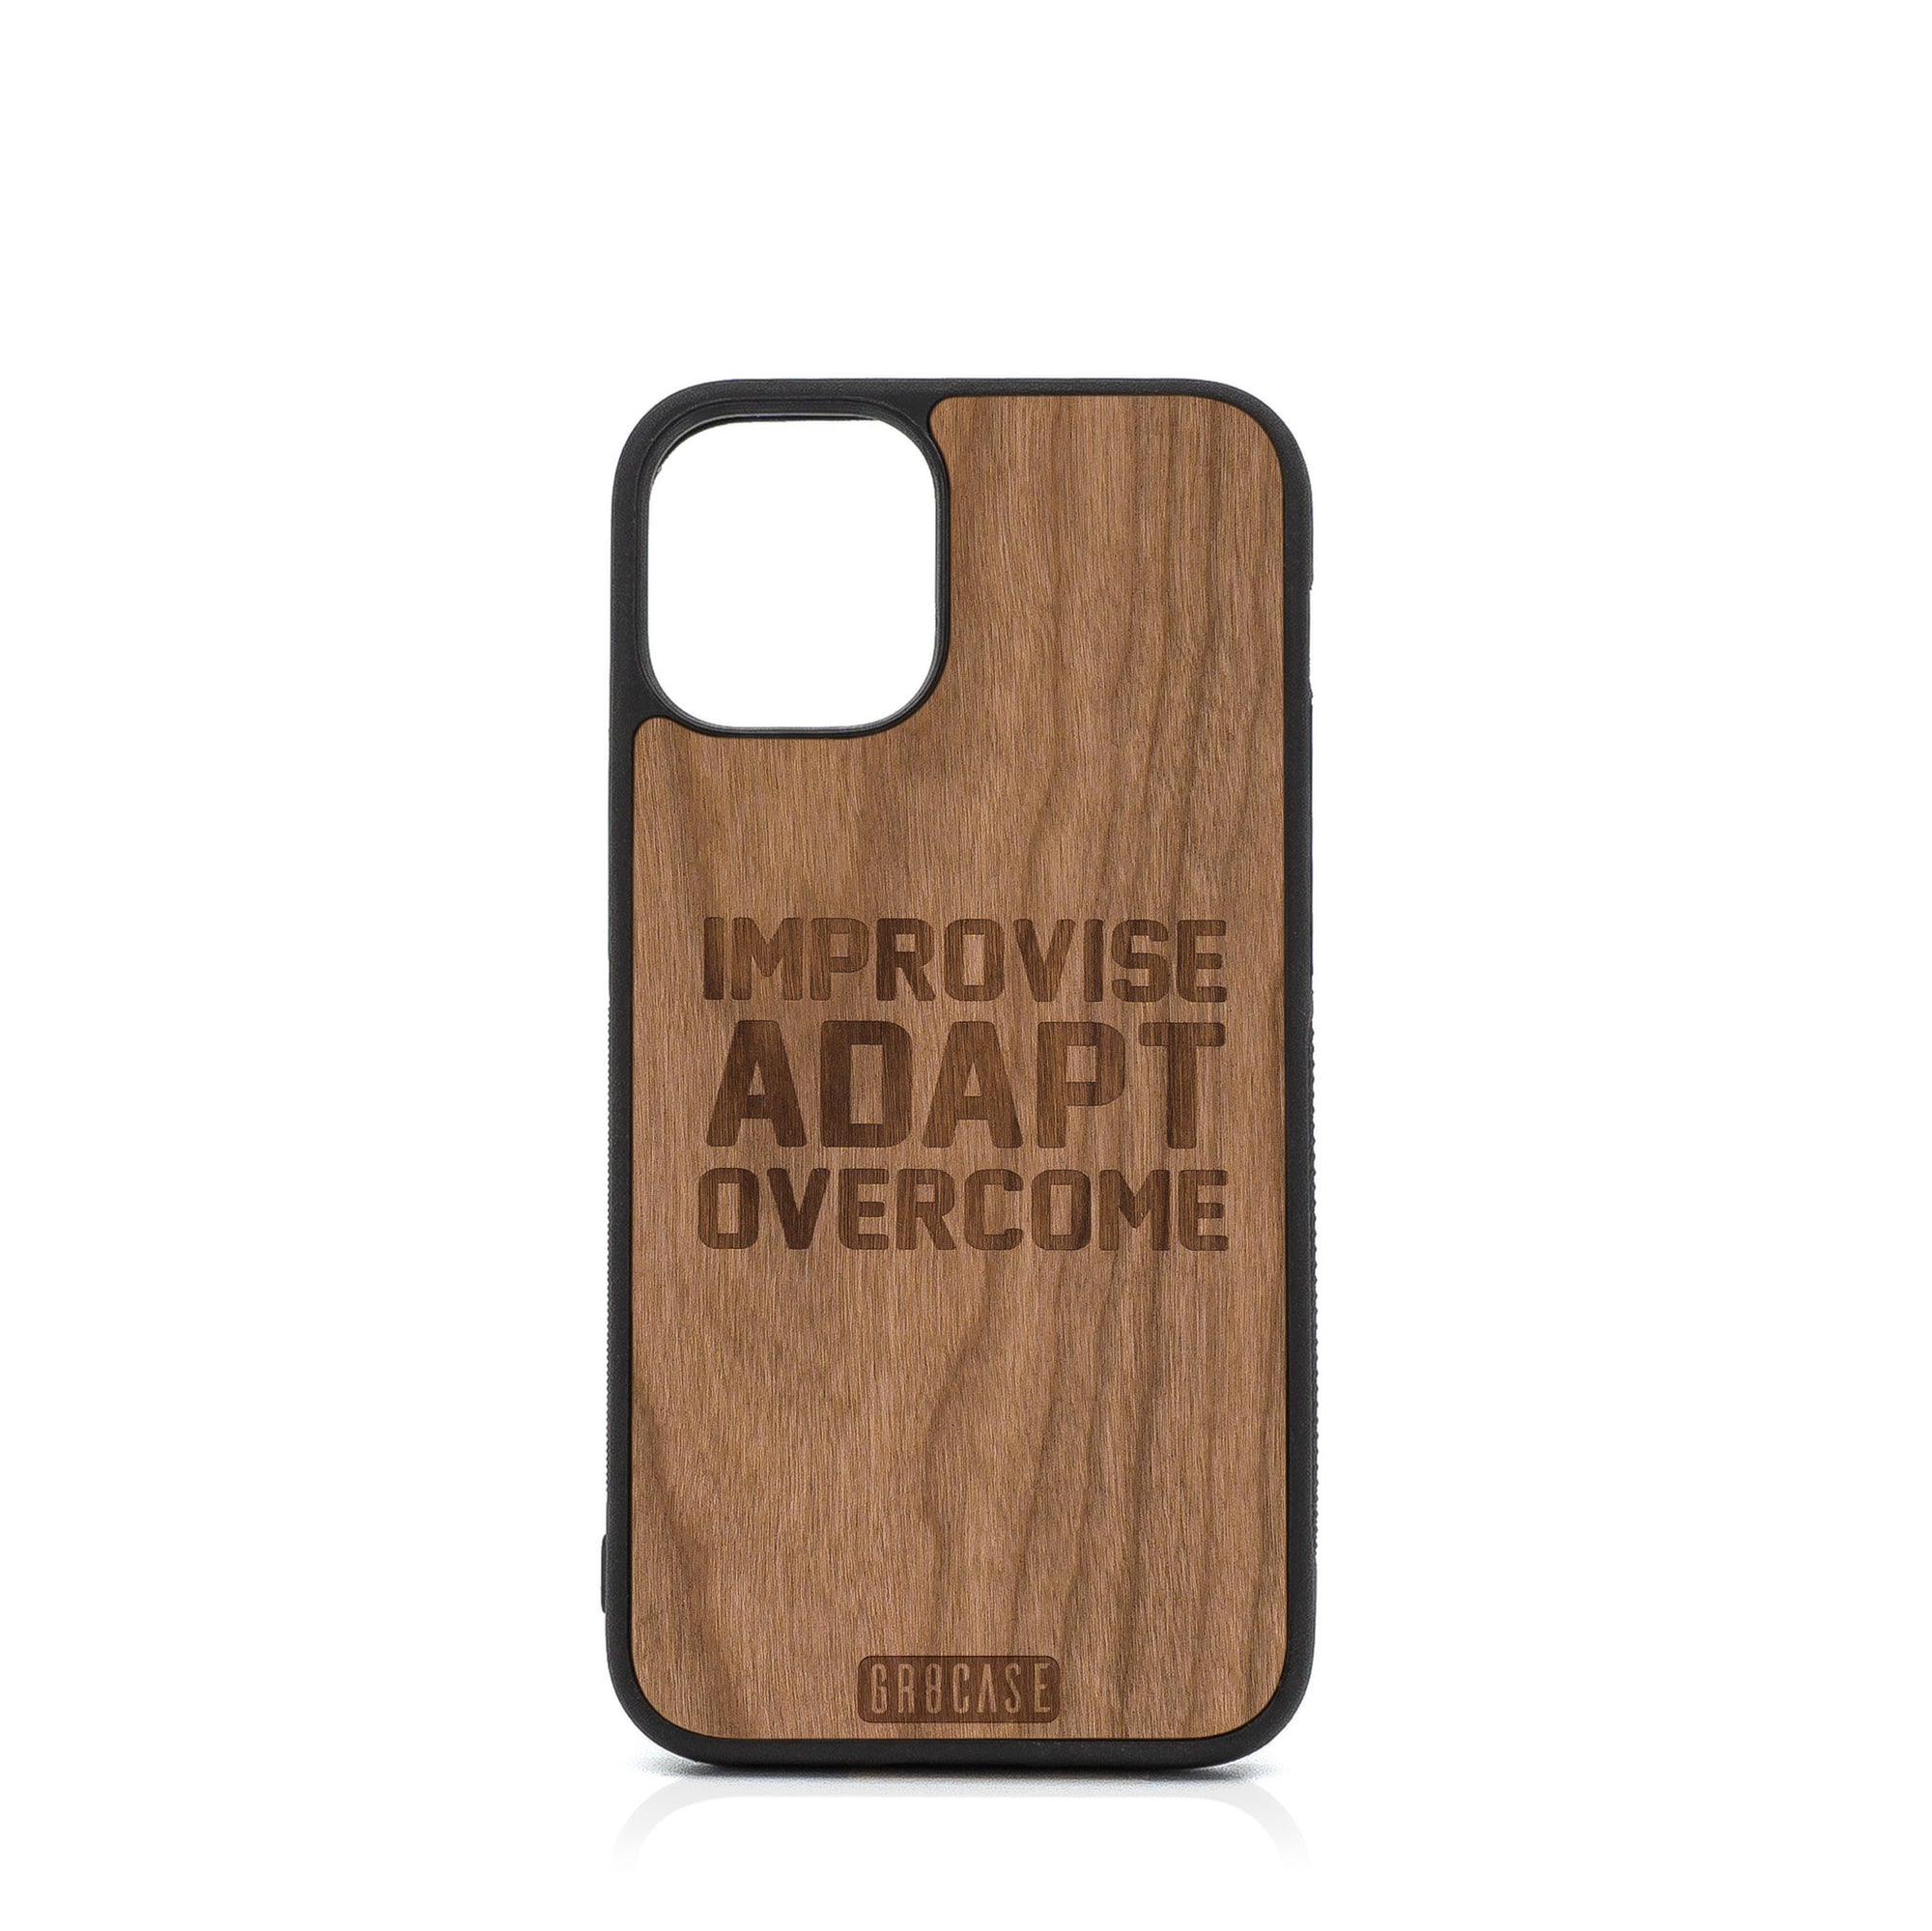 Improvise Adapt Overcome Design Wood Case For iPhone 12 Mini